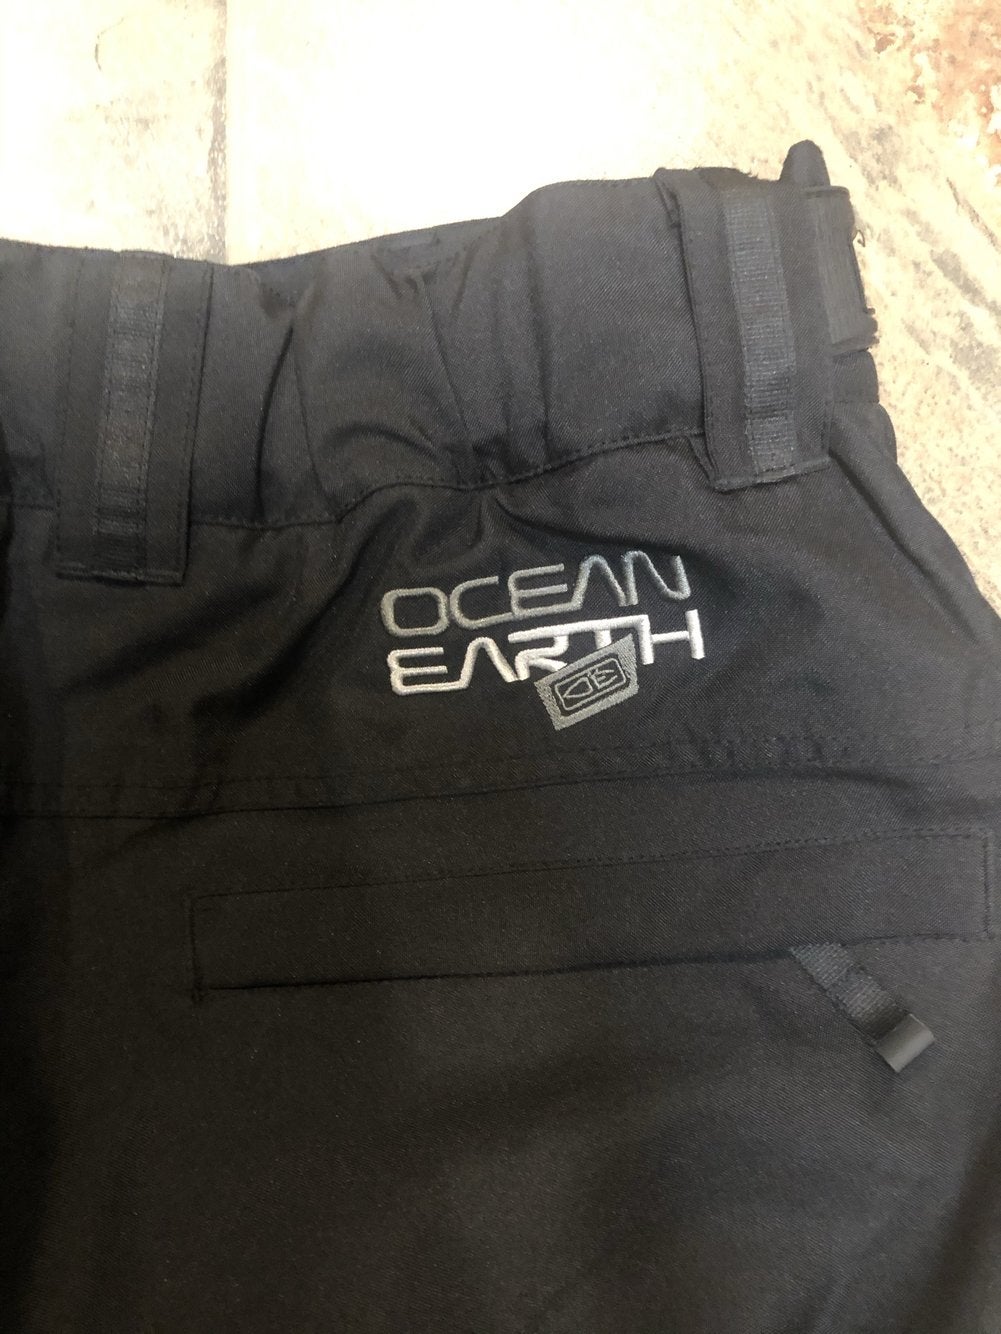 NWT Mens OCEAN & EARTH Black Insulated Performance Snowboard Ski Pants Large 